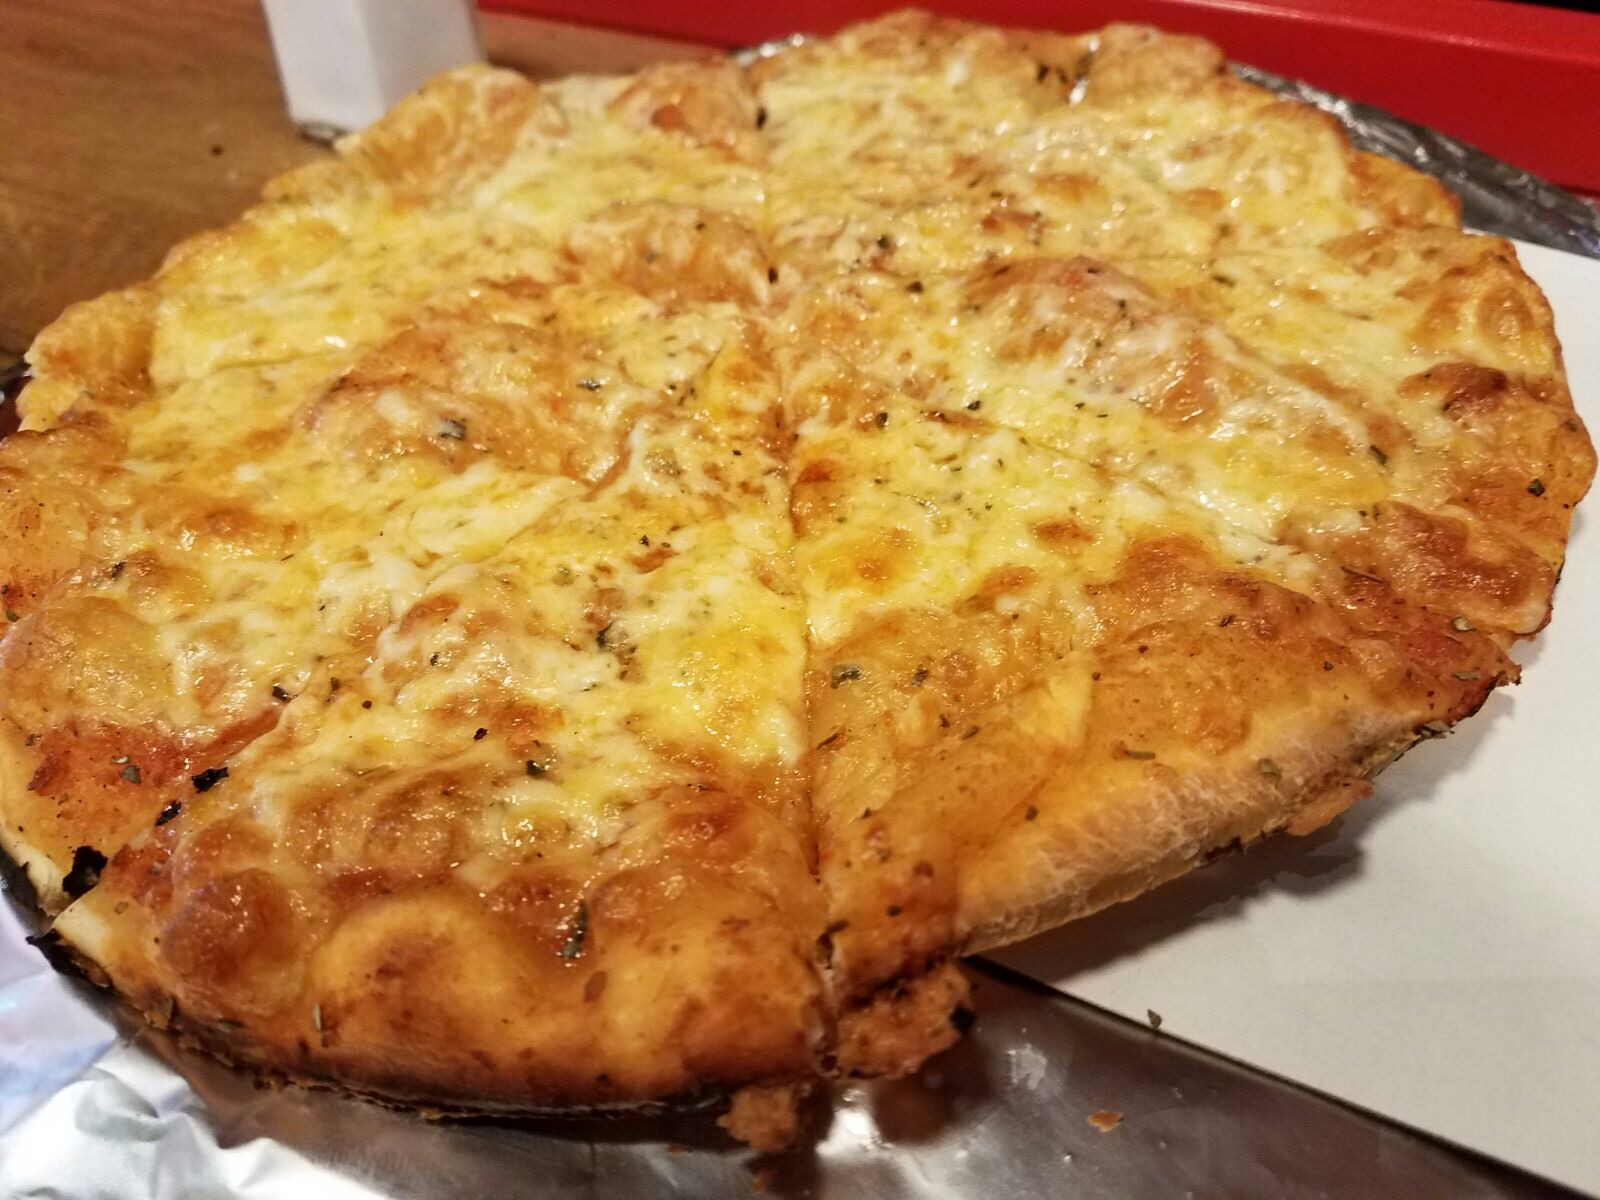  Gluten Free cheese pizza from Luigi’s Pizza  